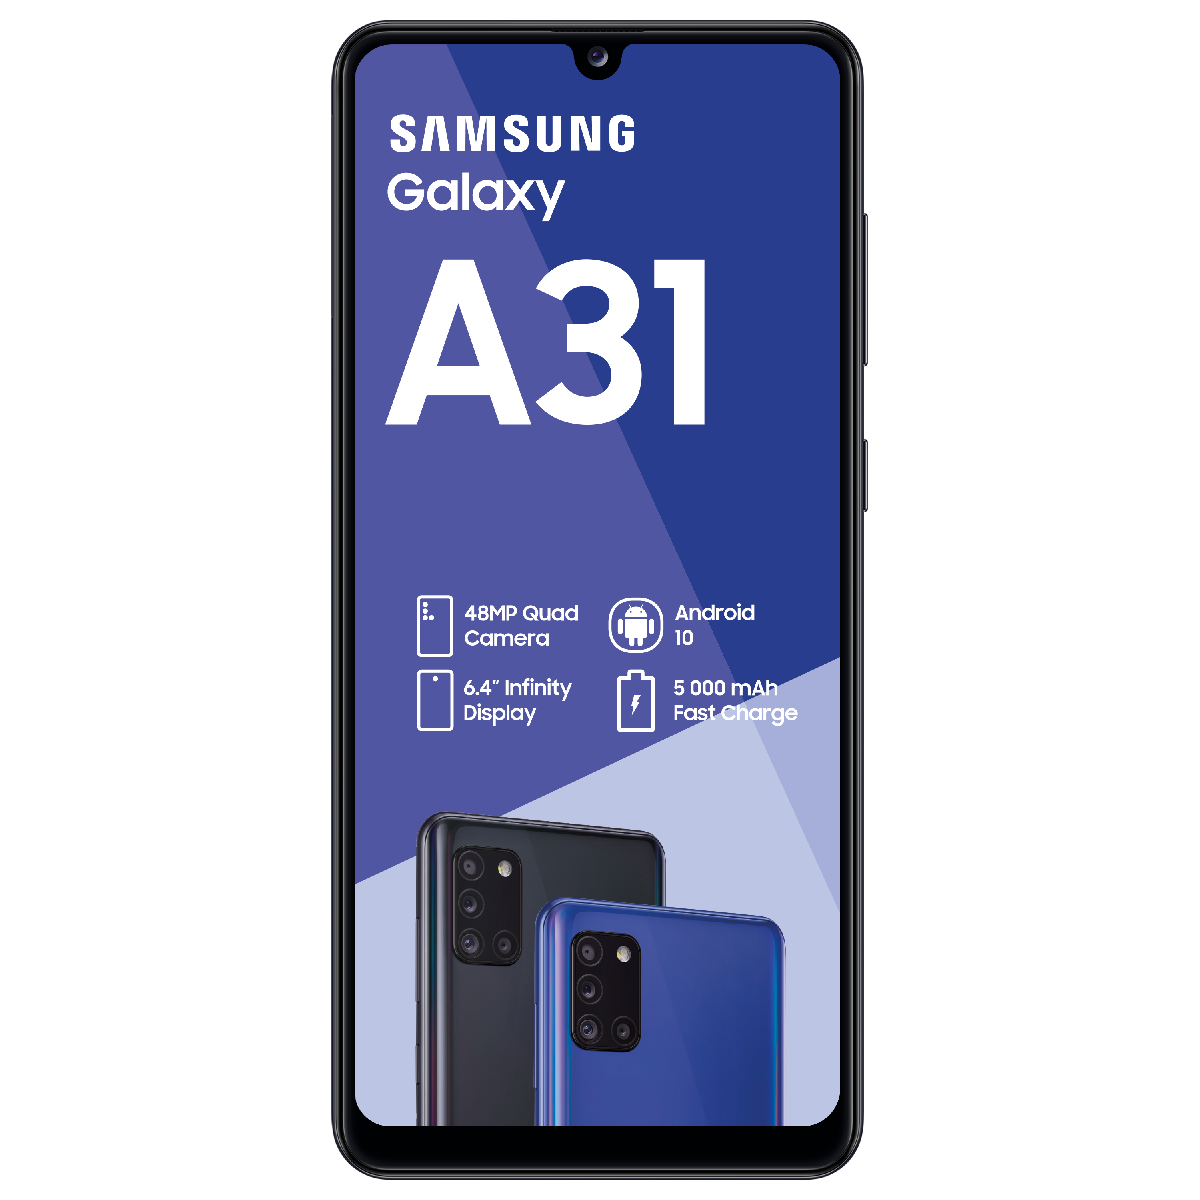  Samsung Galaxy A31 (Vodacom)